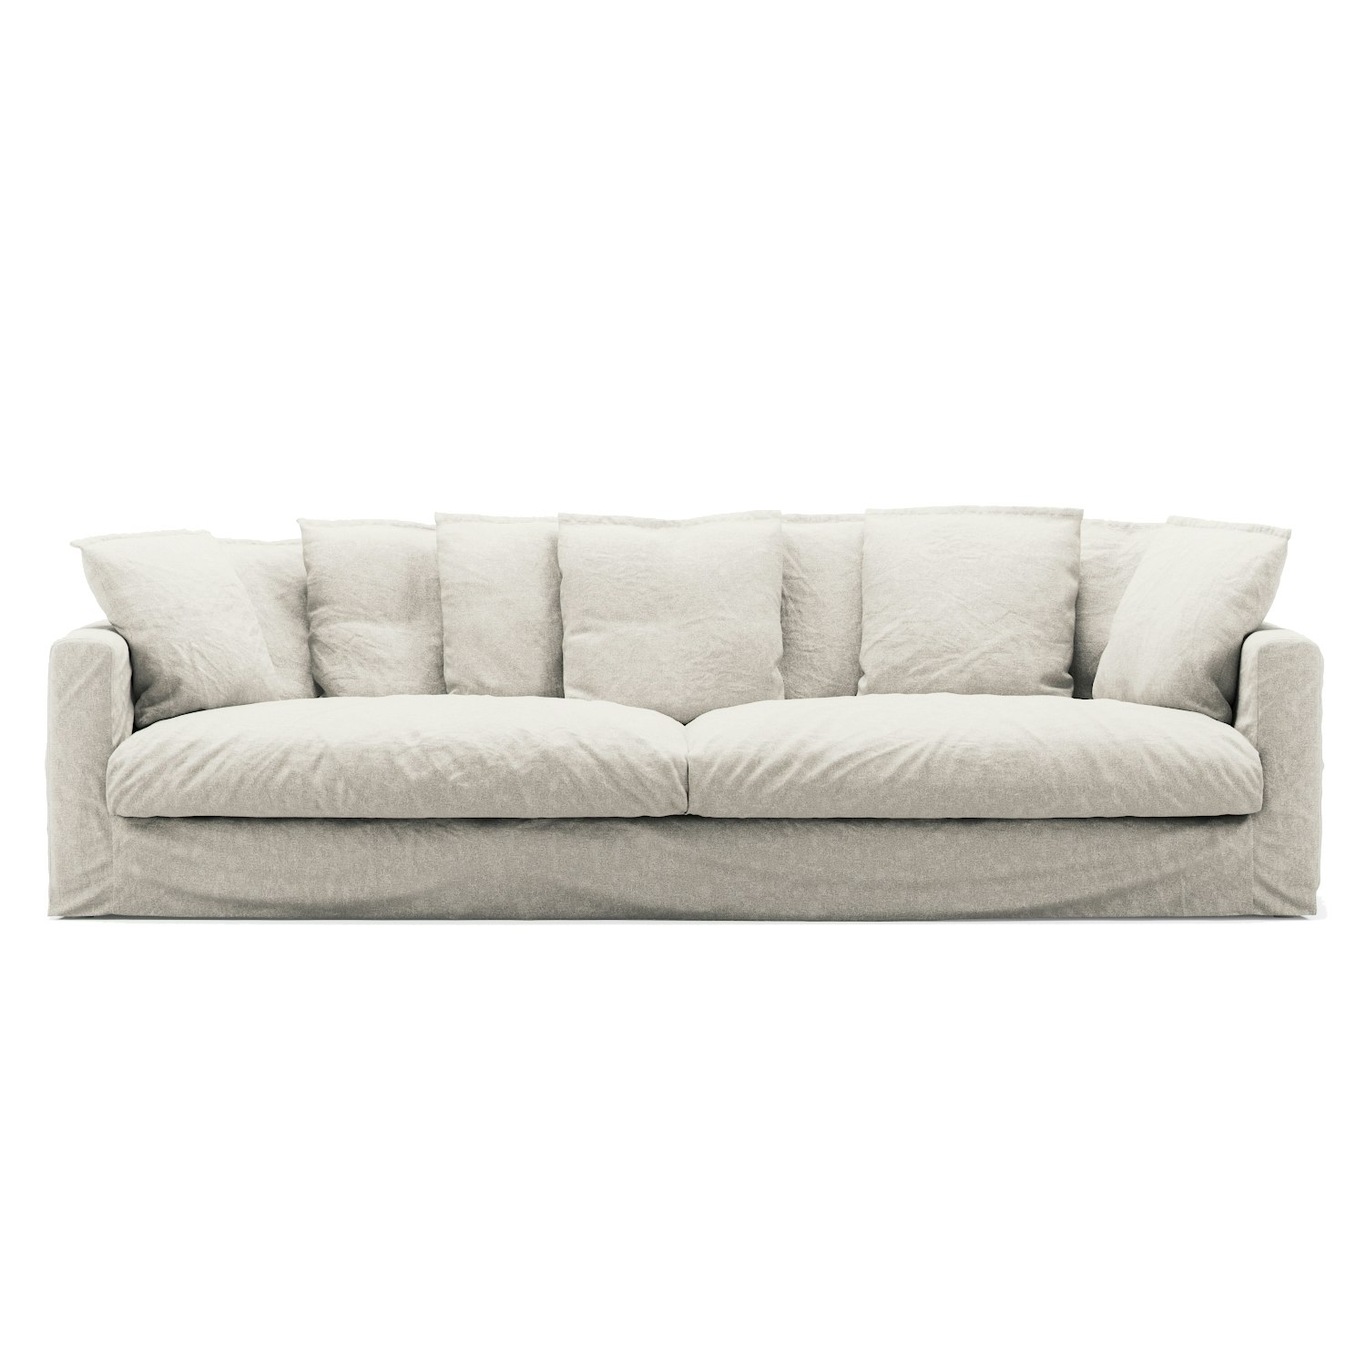 Le Grand Air Sofa 4-Seater Linen, Creamy White